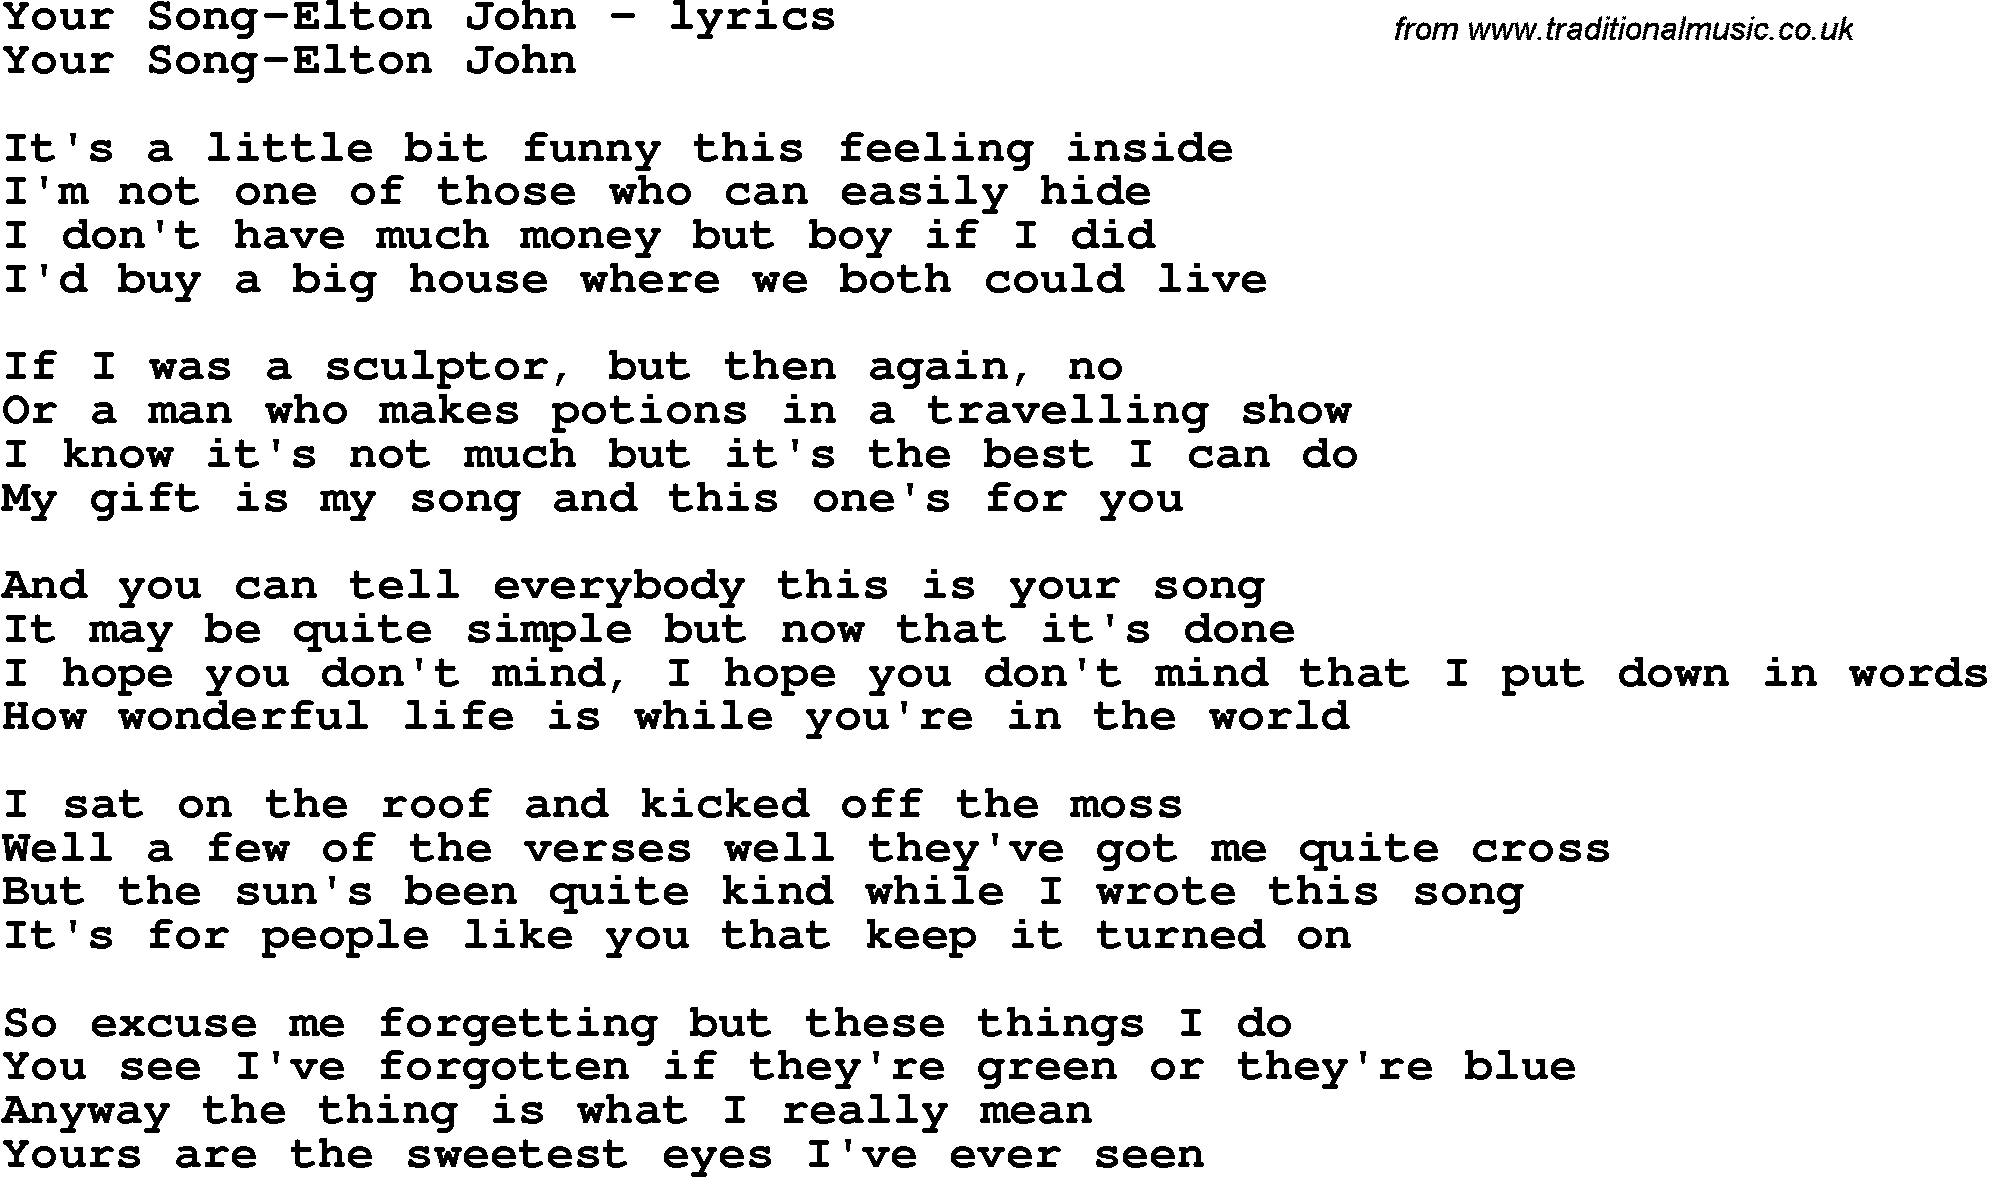 Love Song Lyrics For:your Song-Elton John - Free Printable Song Lyrics